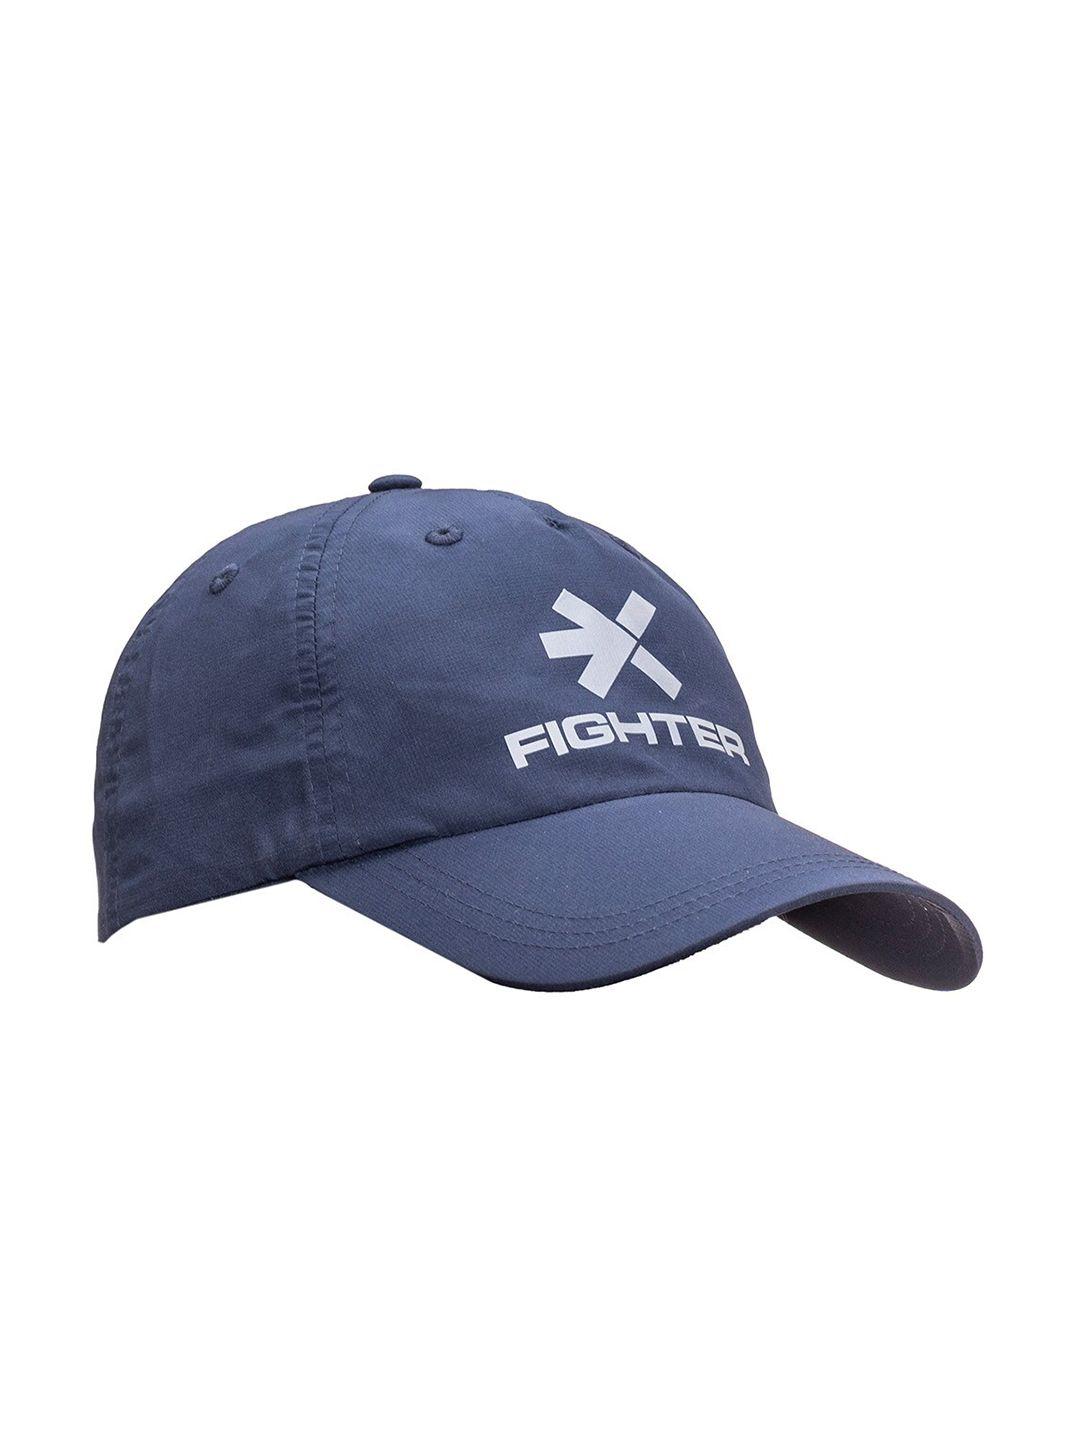 hrx by hrithik roshan unisex navy blue printed visor cap